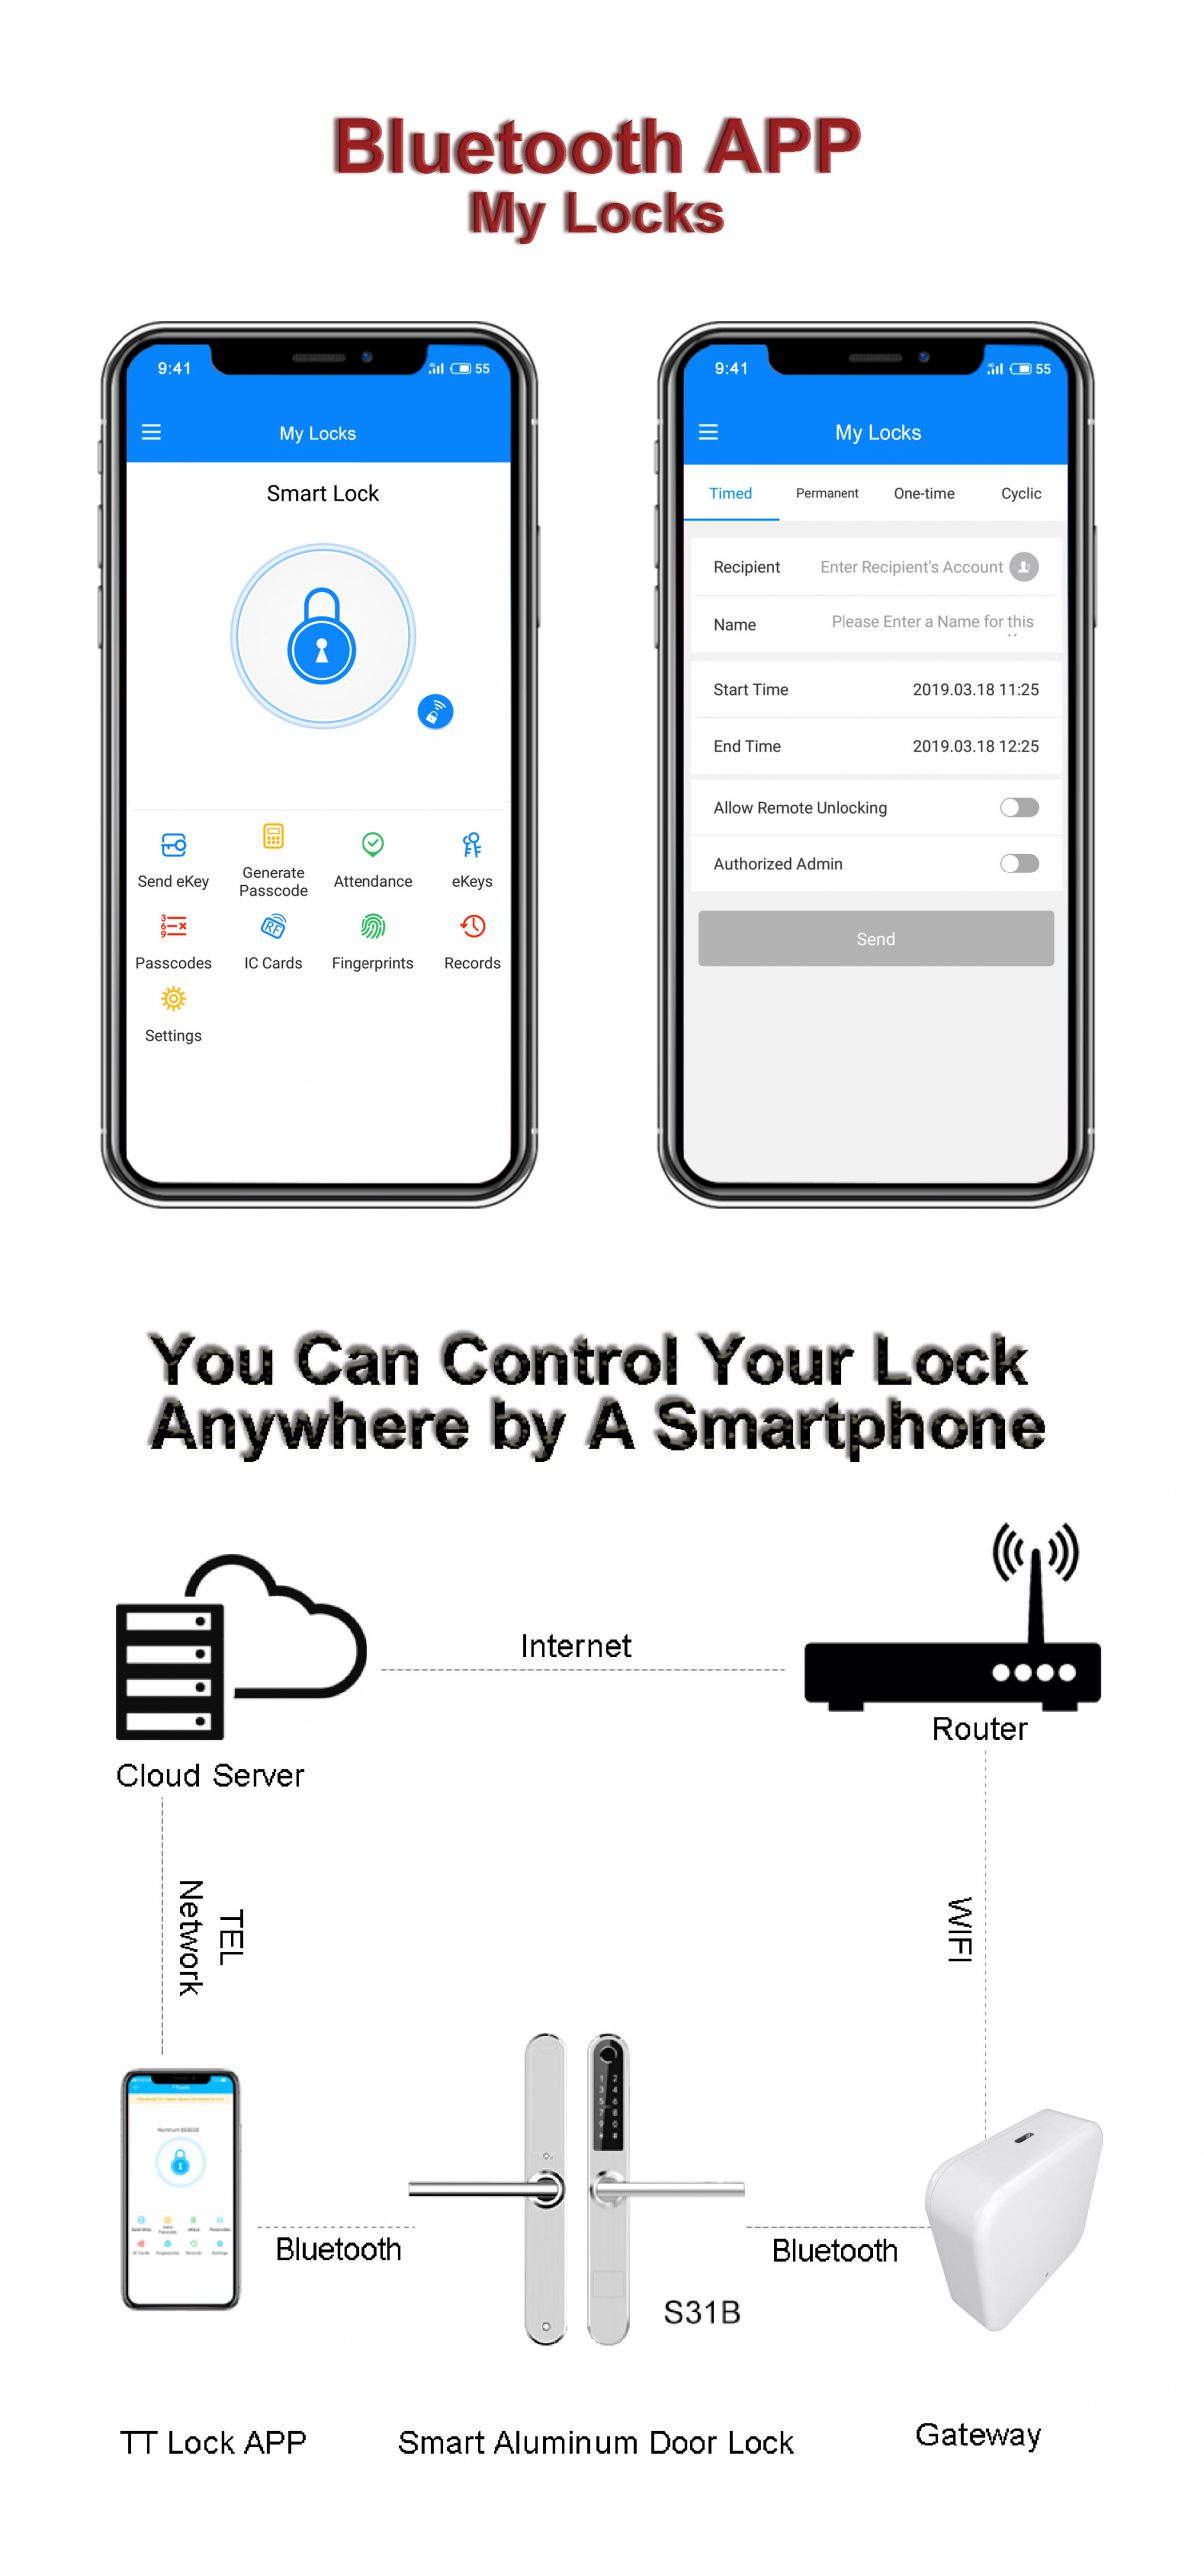 Smart Lock WiFi Gateway ใช้สำหรับเชื่อมต่อ WiFi กับ กลอนดิจิตอล รุ่น Winmax-WiFi